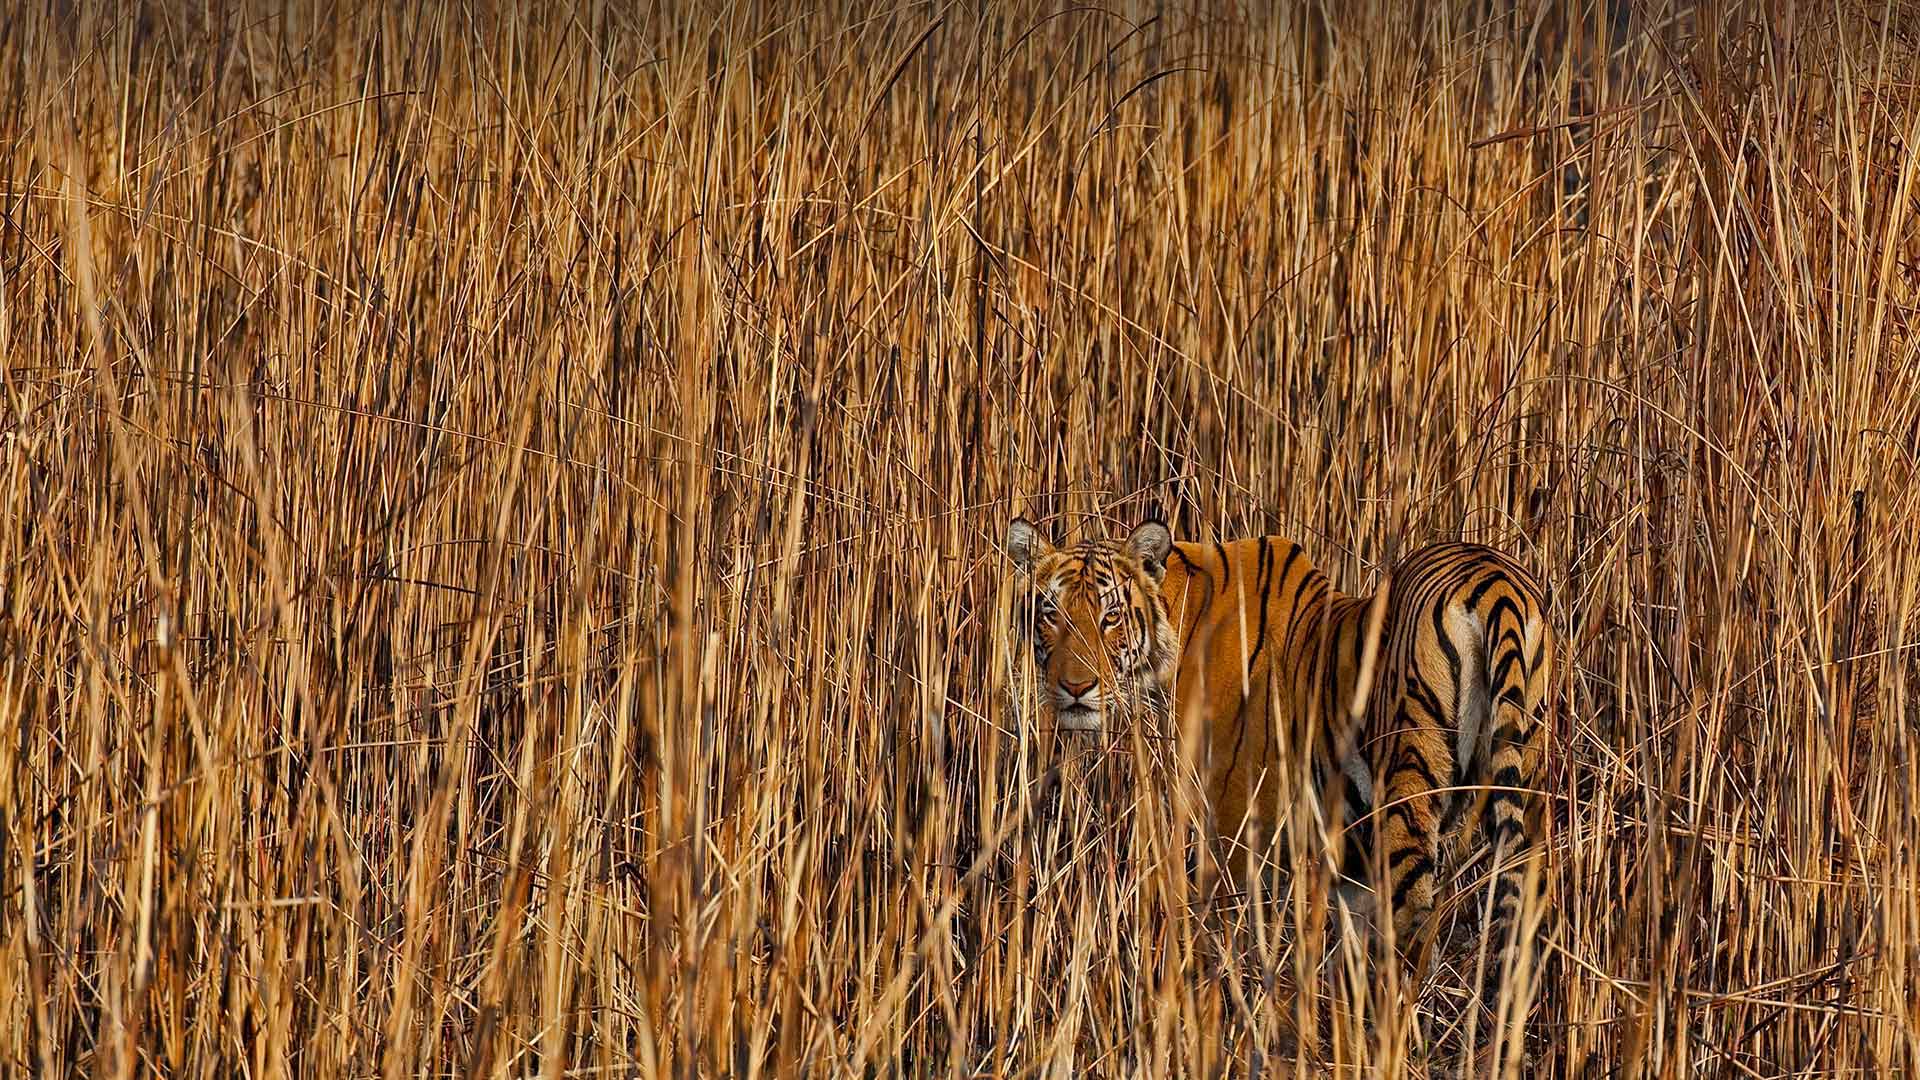 Tiger camouflaged in tall grass, Assam, India - Sandesh Kadur